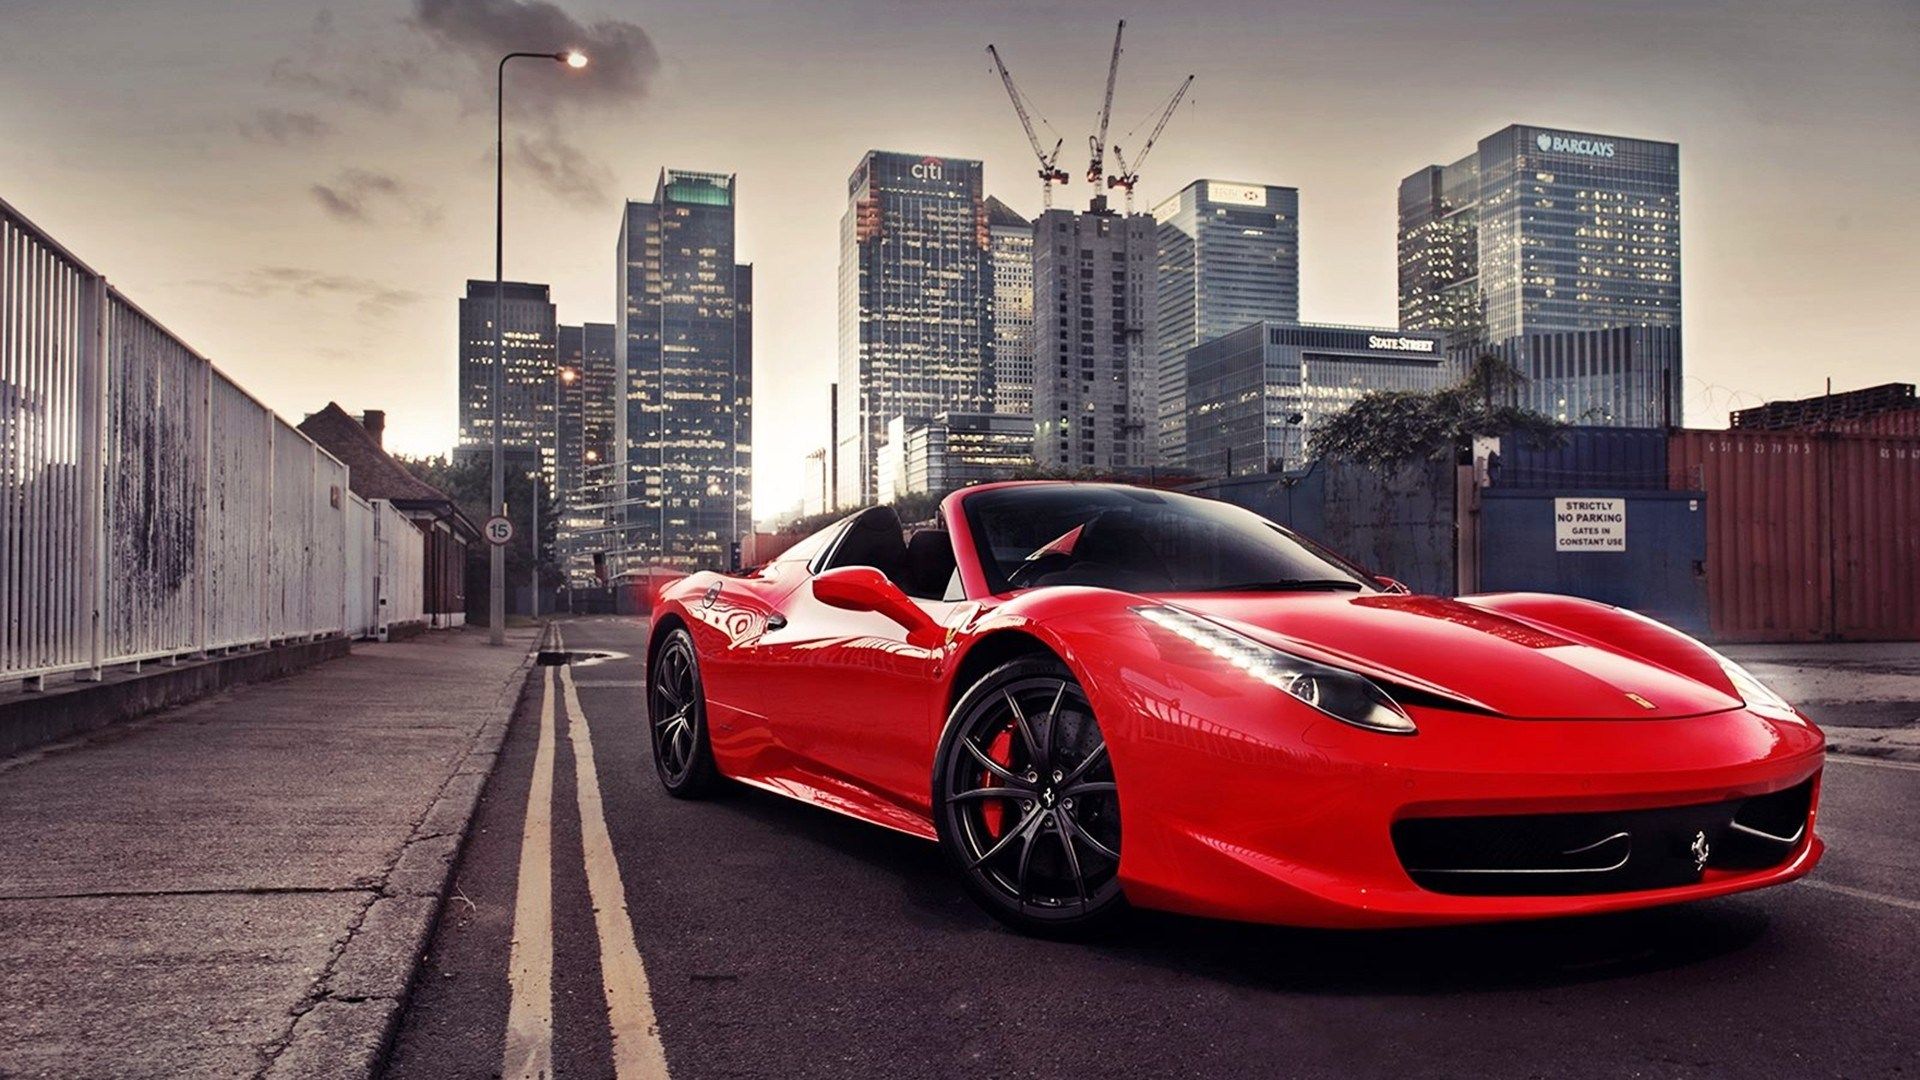 31+ City Blur View Ferrari Hd Wallpaper HD download